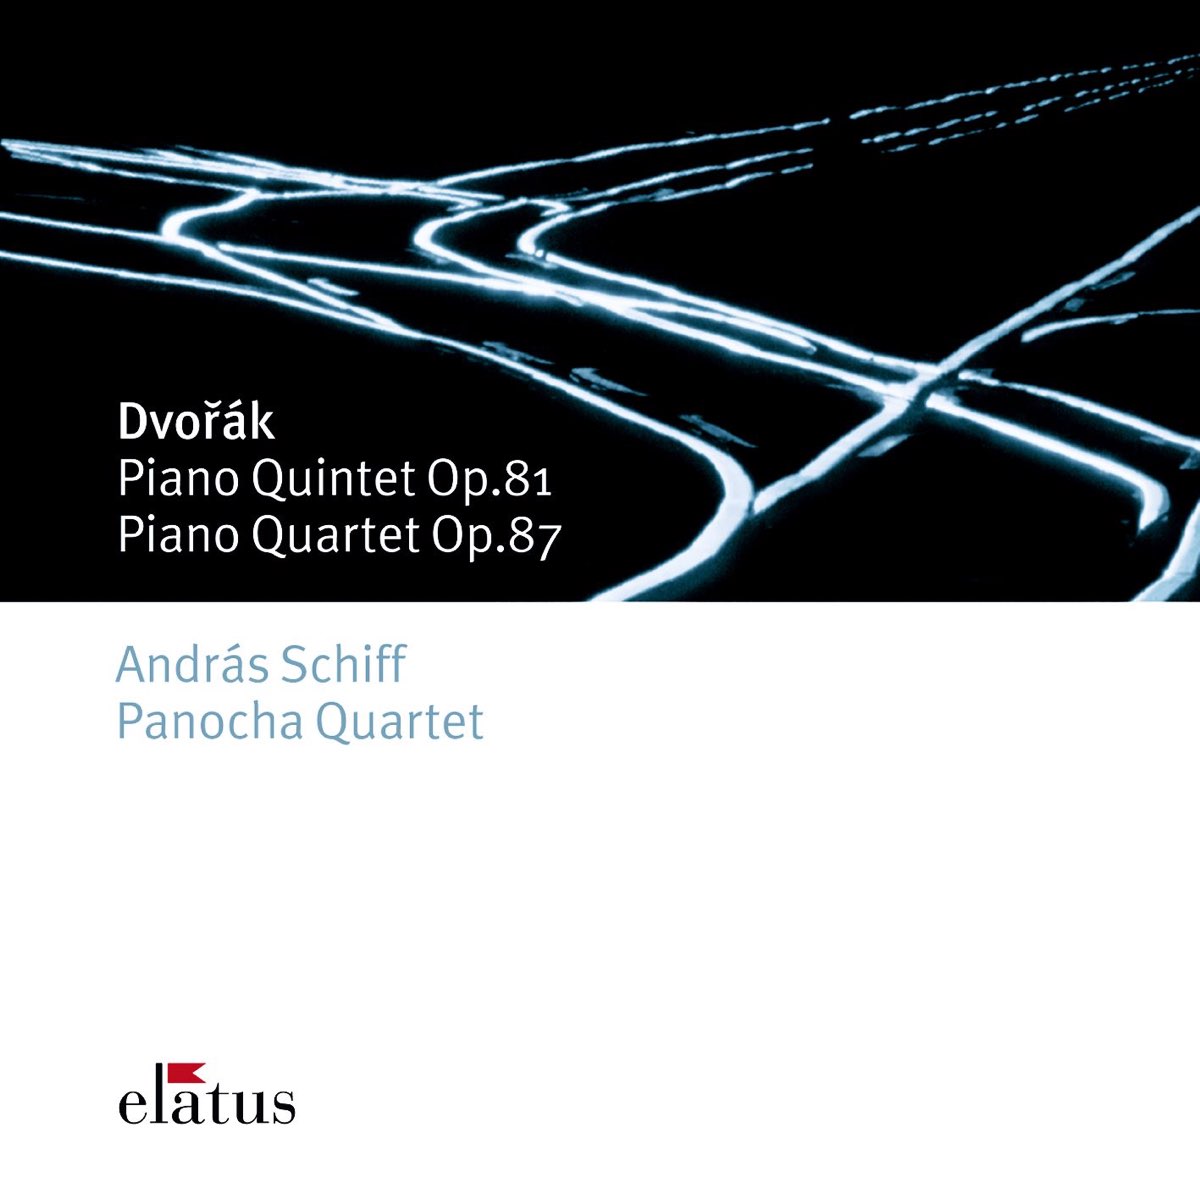 Dvorák: Piano Quintet, Op. 81 & Piano Quartet, Op. 87 by András Schiff &  Panocha Quartet on Apple Music